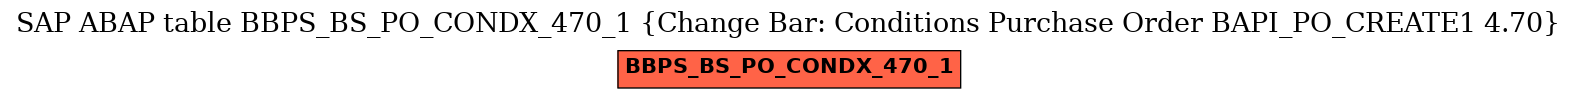 E-R Diagram for table BBPS_BS_PO_CONDX_470_1 (Change Bar: Conditions Purchase Order BAPI_PO_CREATE1 4.70)